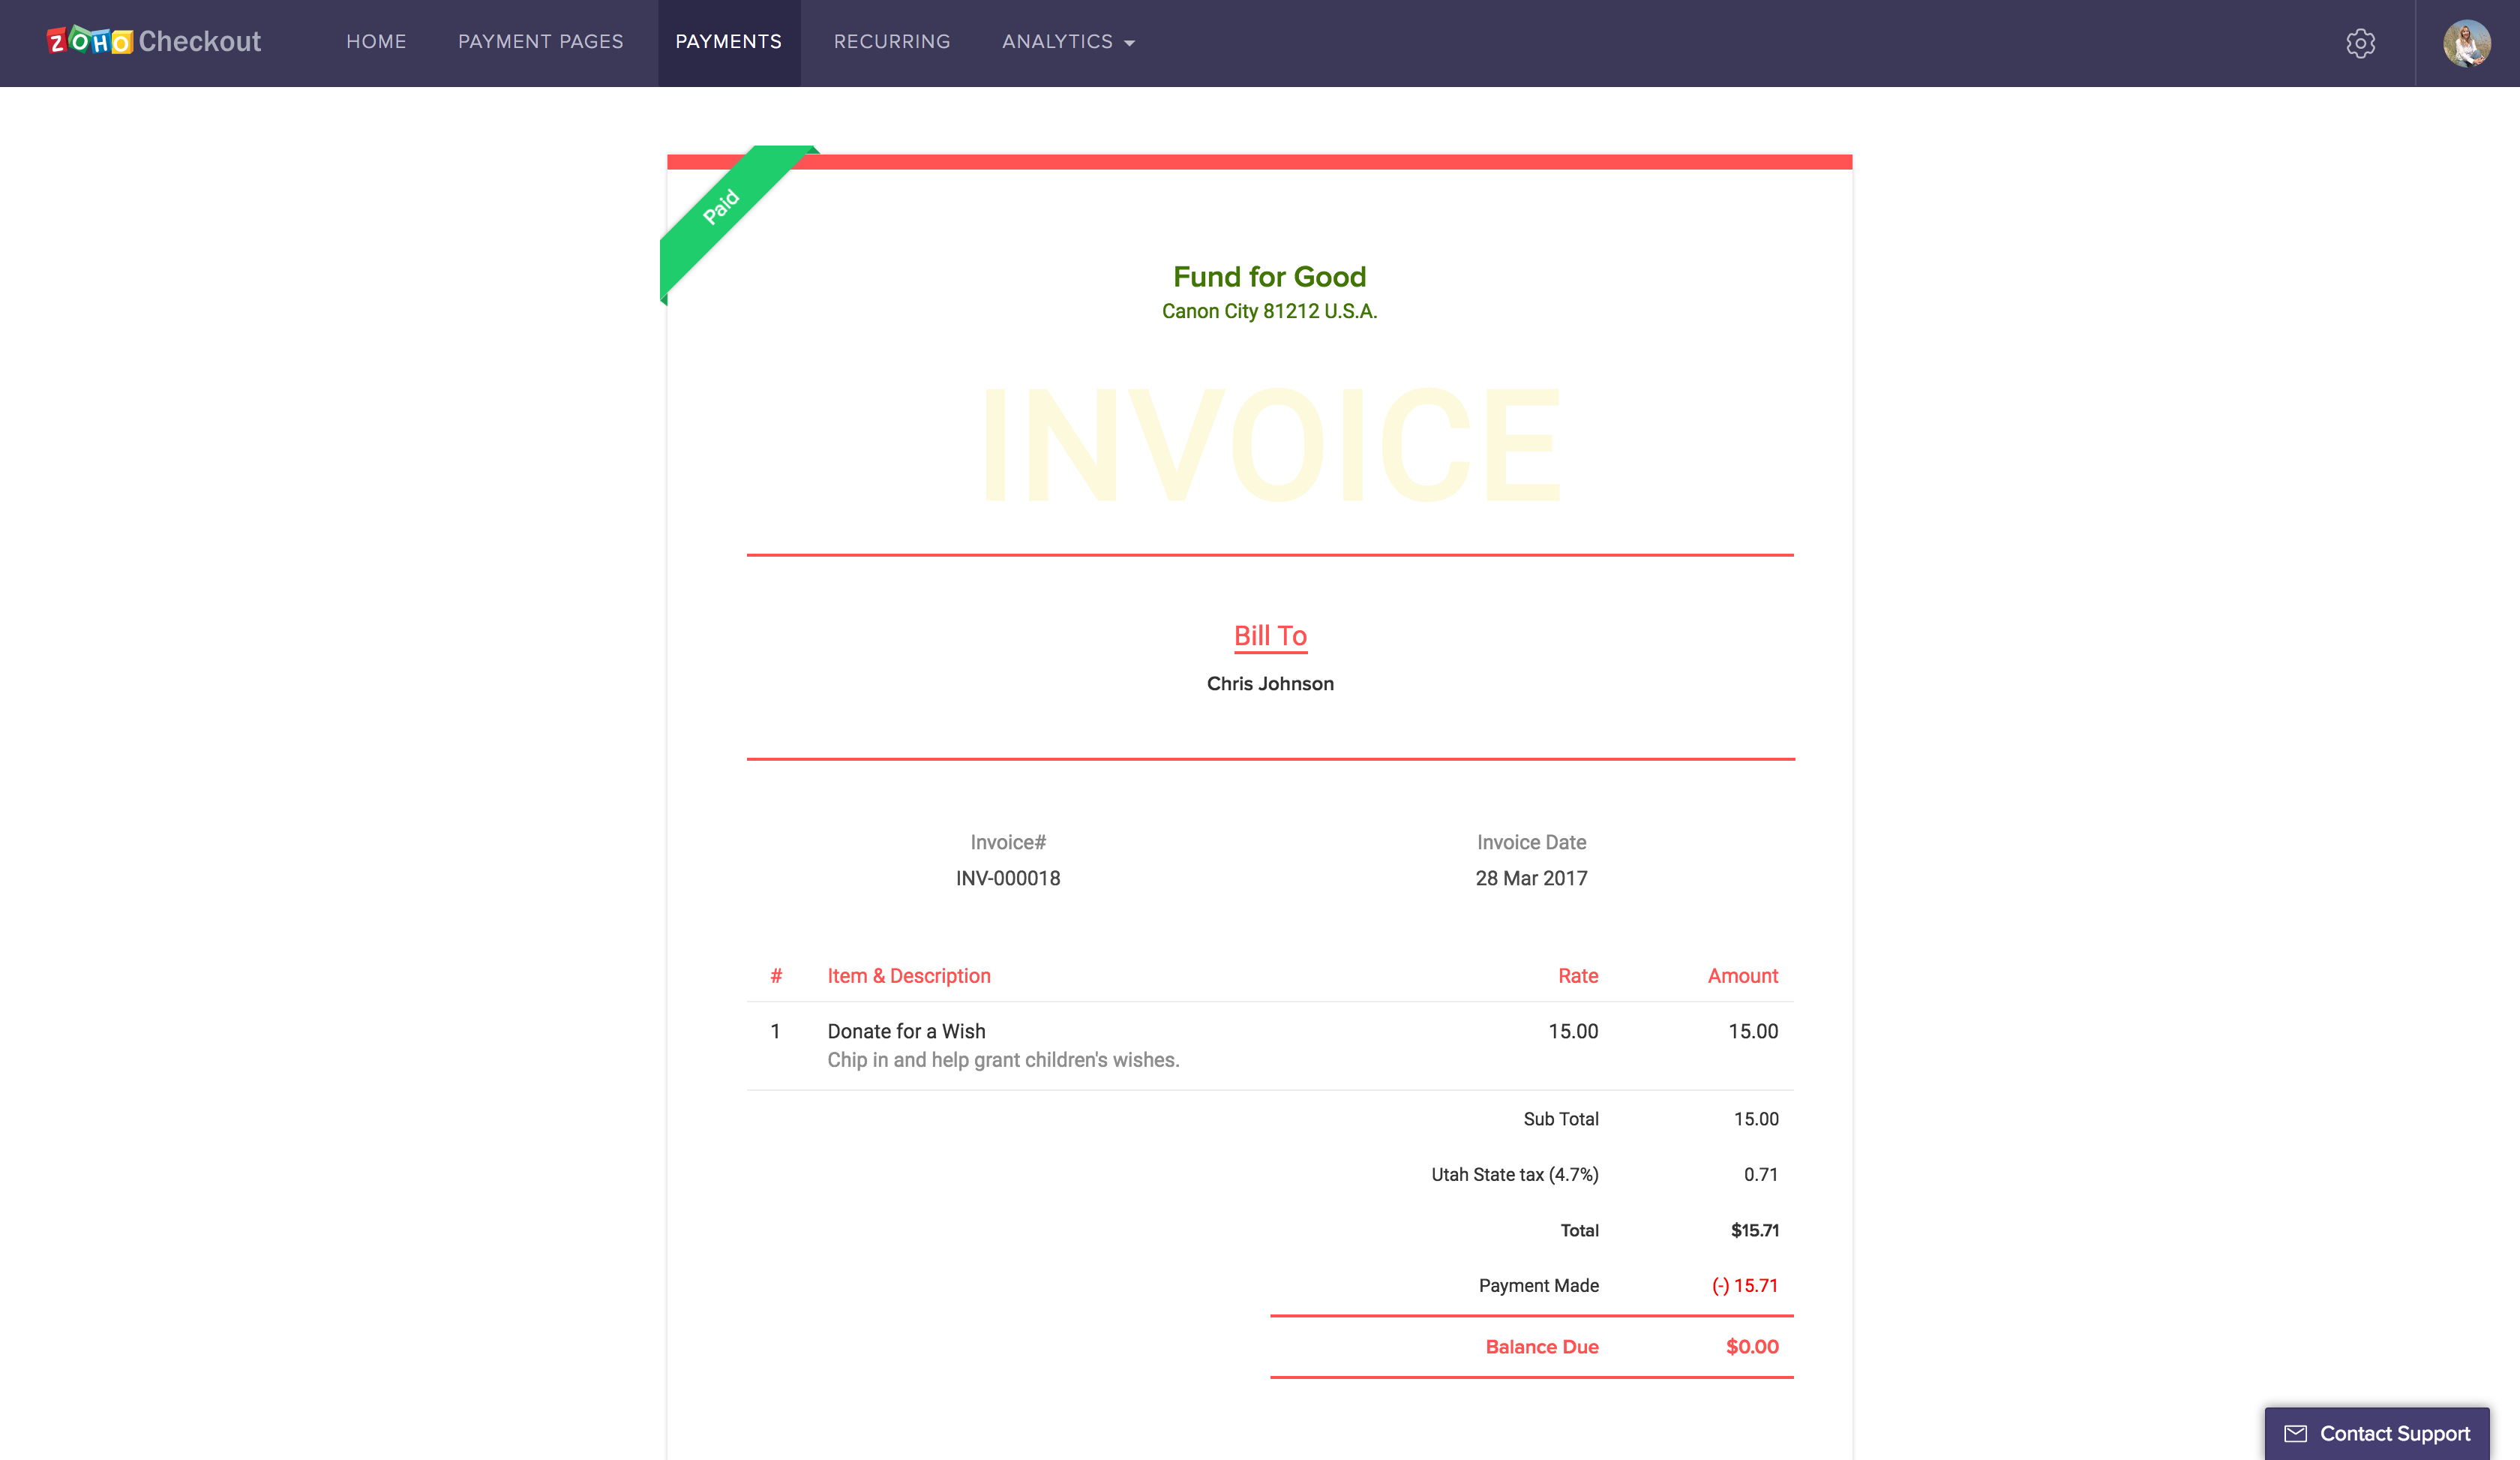 Zoho Checkout invoice information